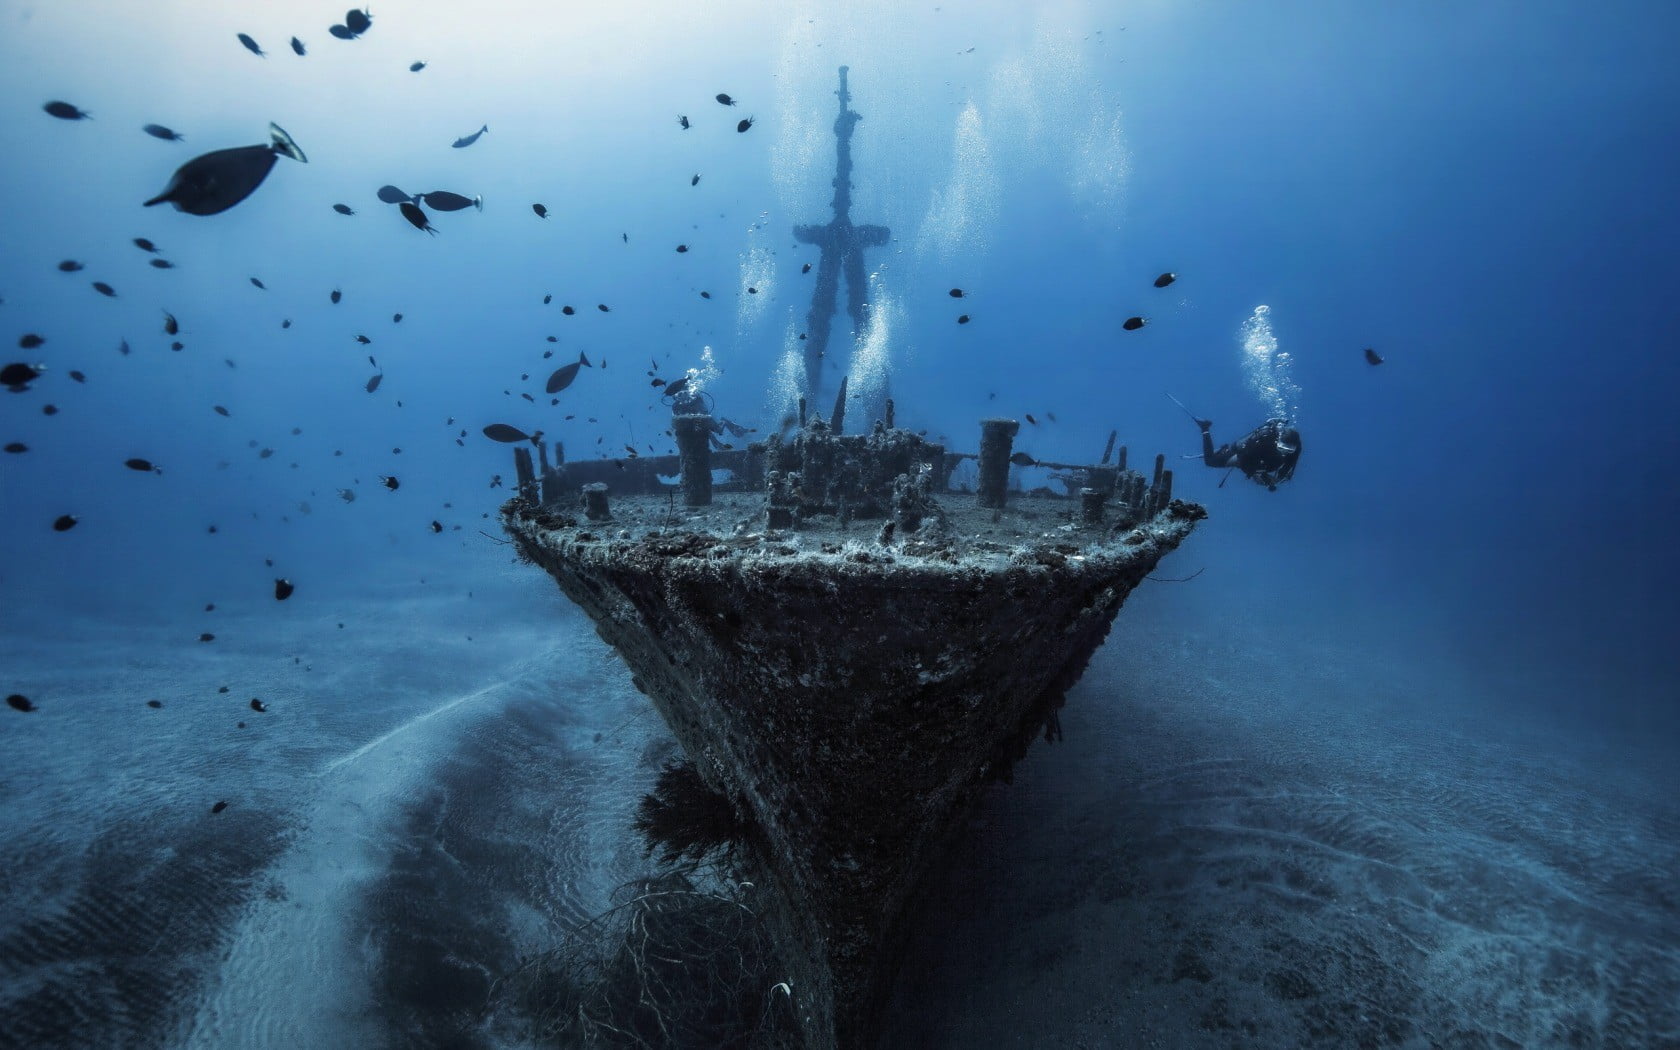 sunken ship photo, underwater, fish, shipwreck, divers, sea, animals in the wild